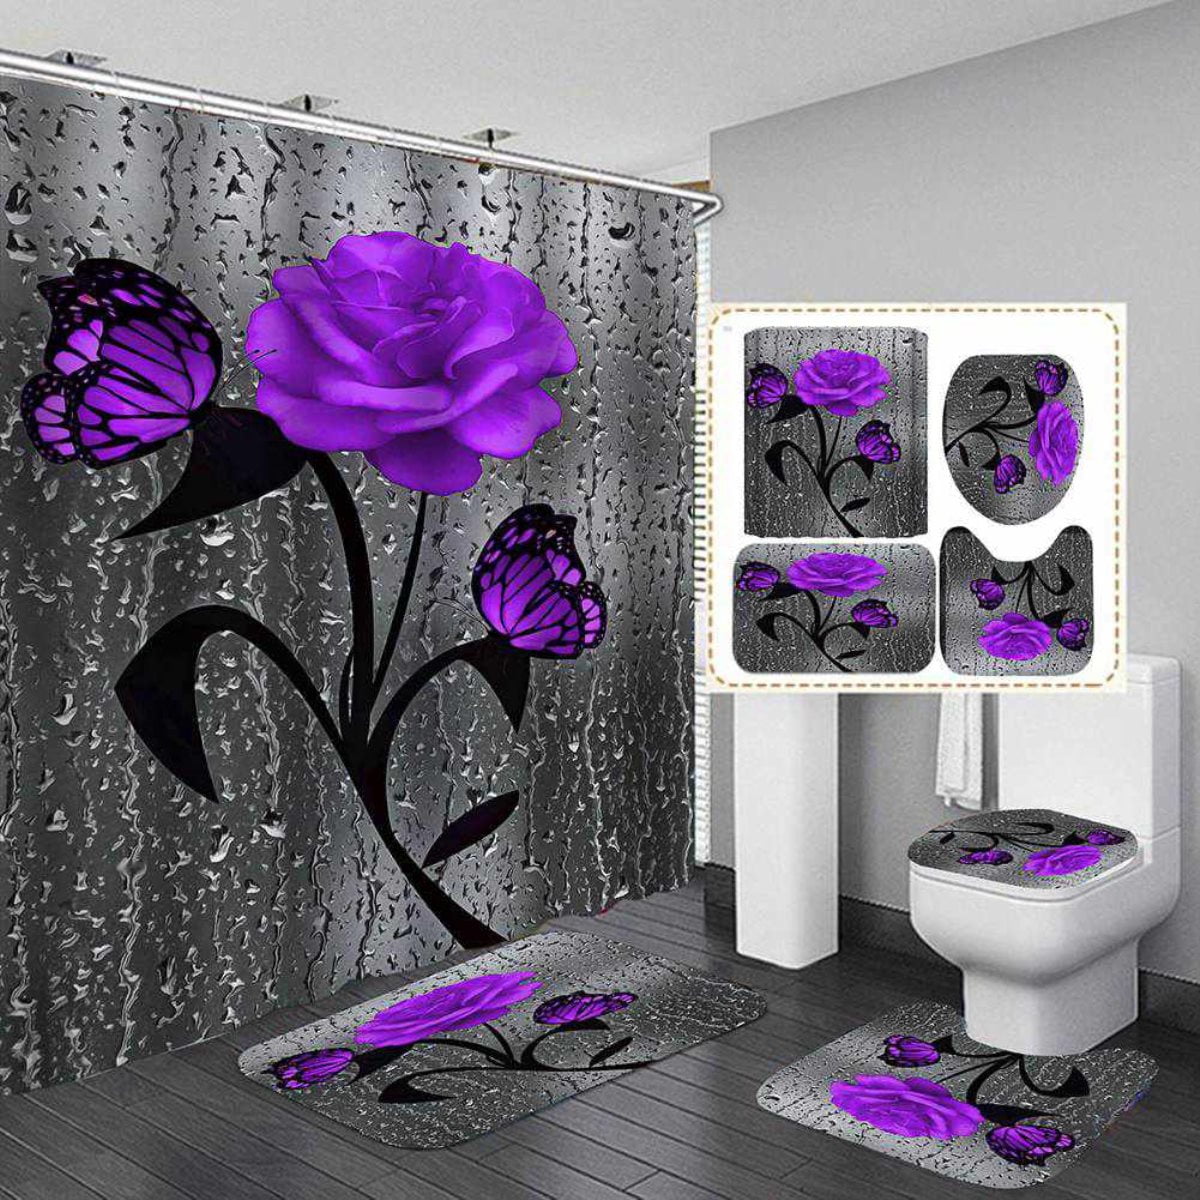  IJQRVJ Las Vegas,Shower Curtain Set,I Love Las Vegas,Bathroom  Curtain for Toilet,Red Black,60x72in(152x183cm) : Home & Kitchen